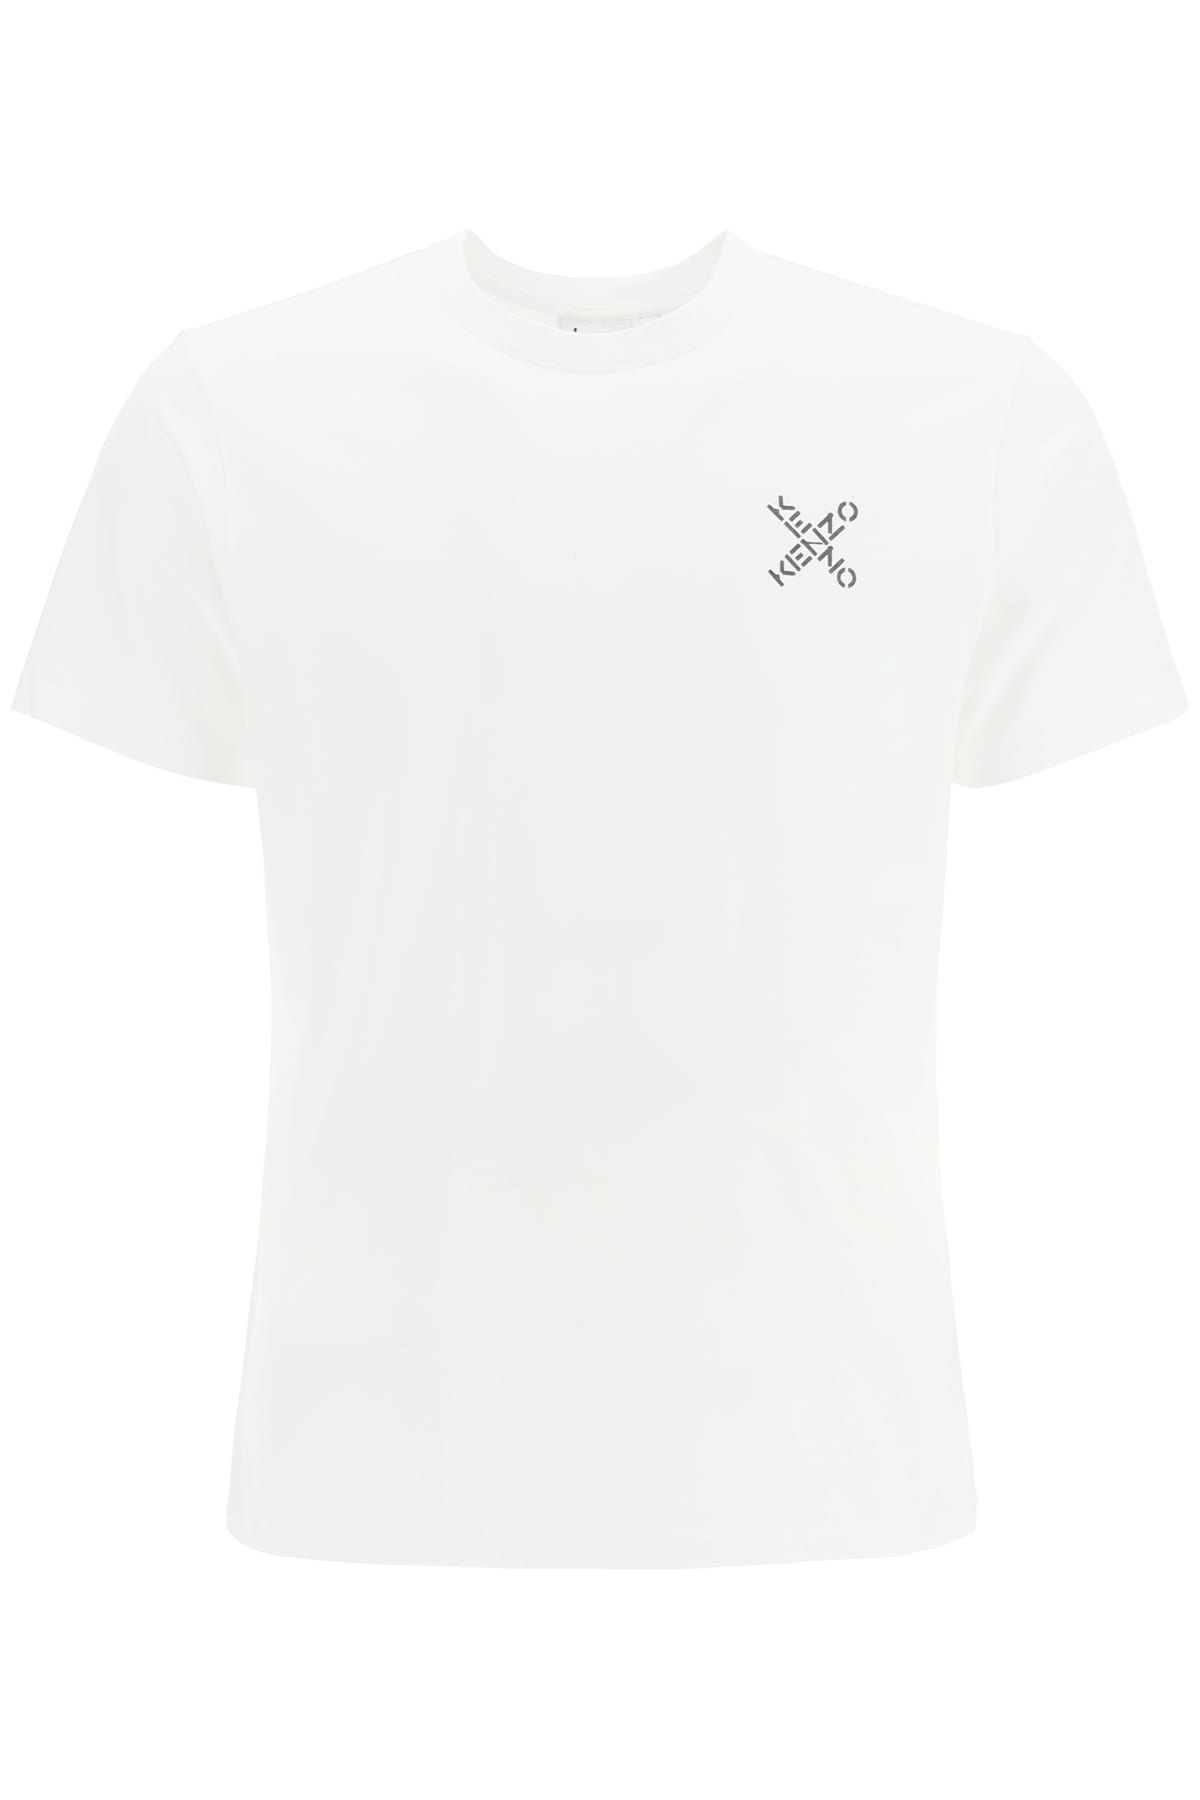 Kenzo Sport Little X Print T-shirt